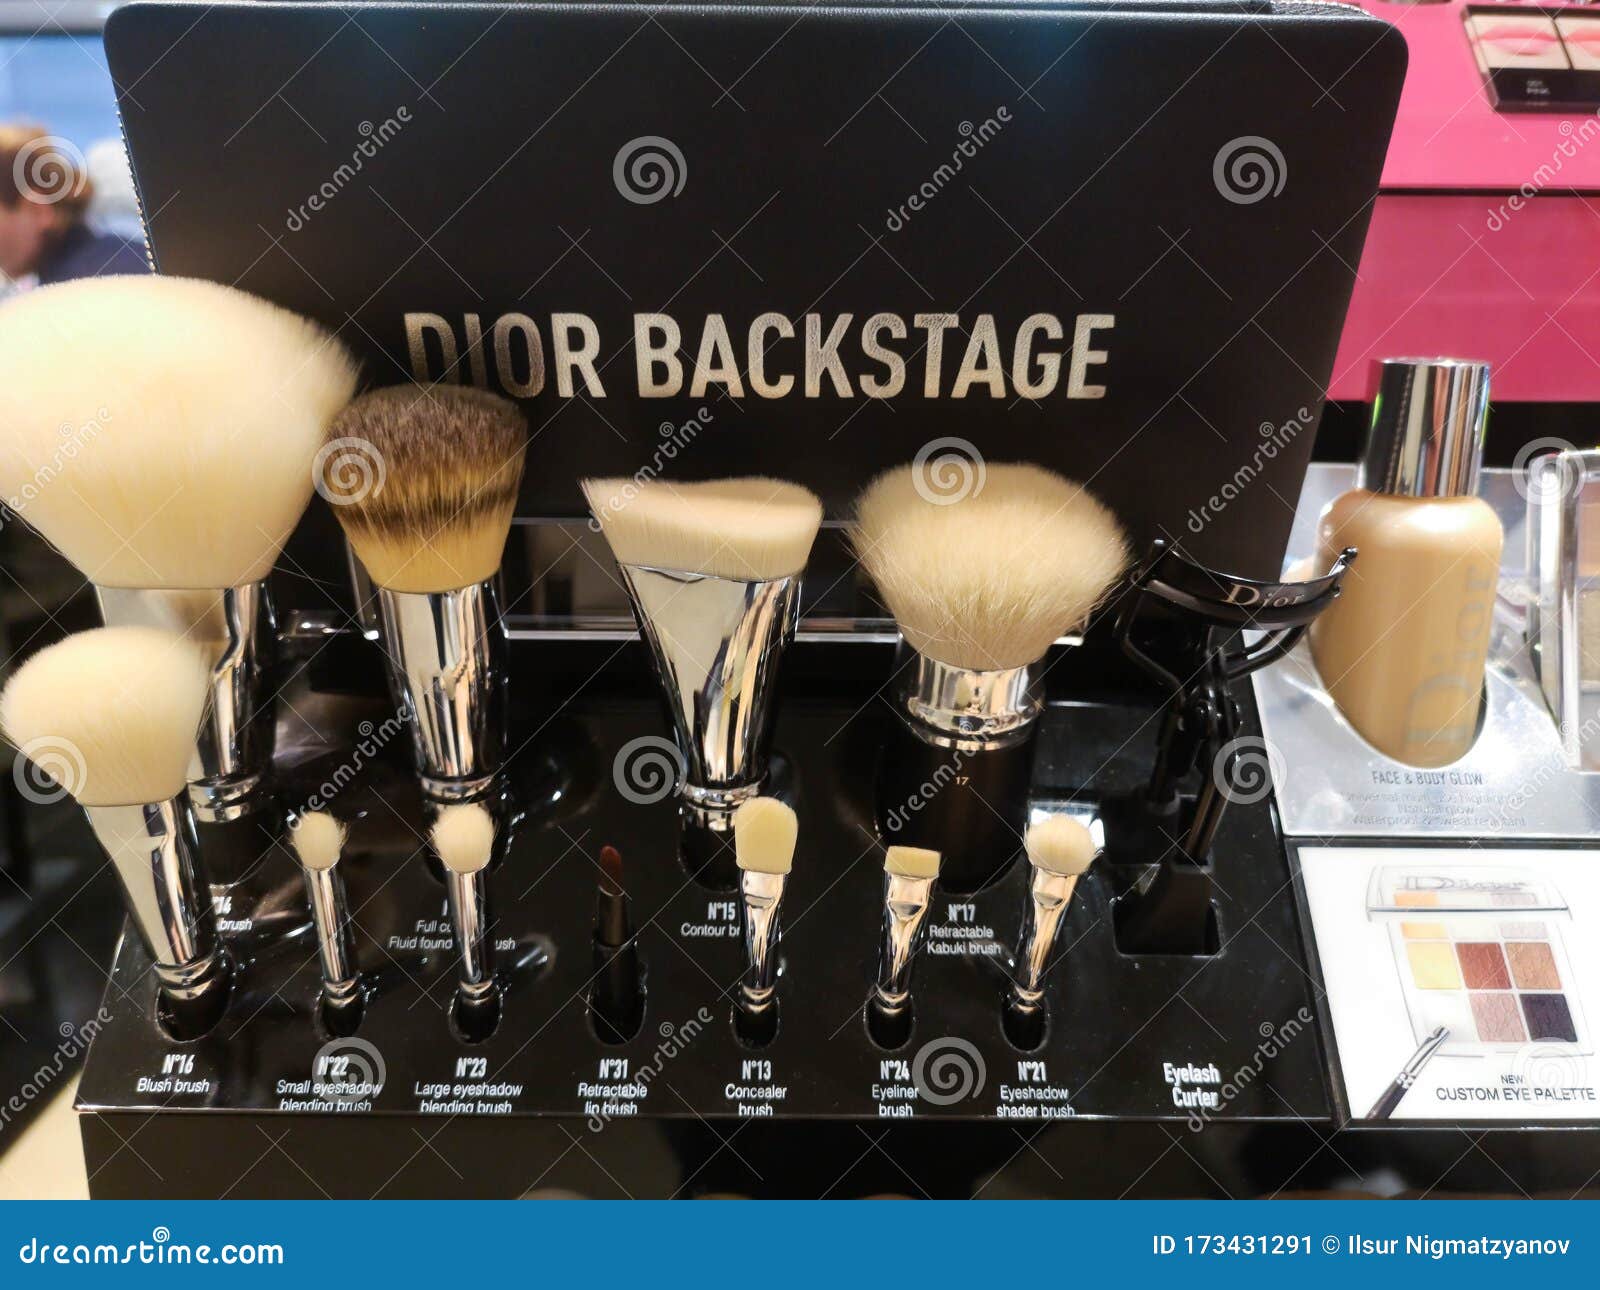 dior backstage makeup brush kit